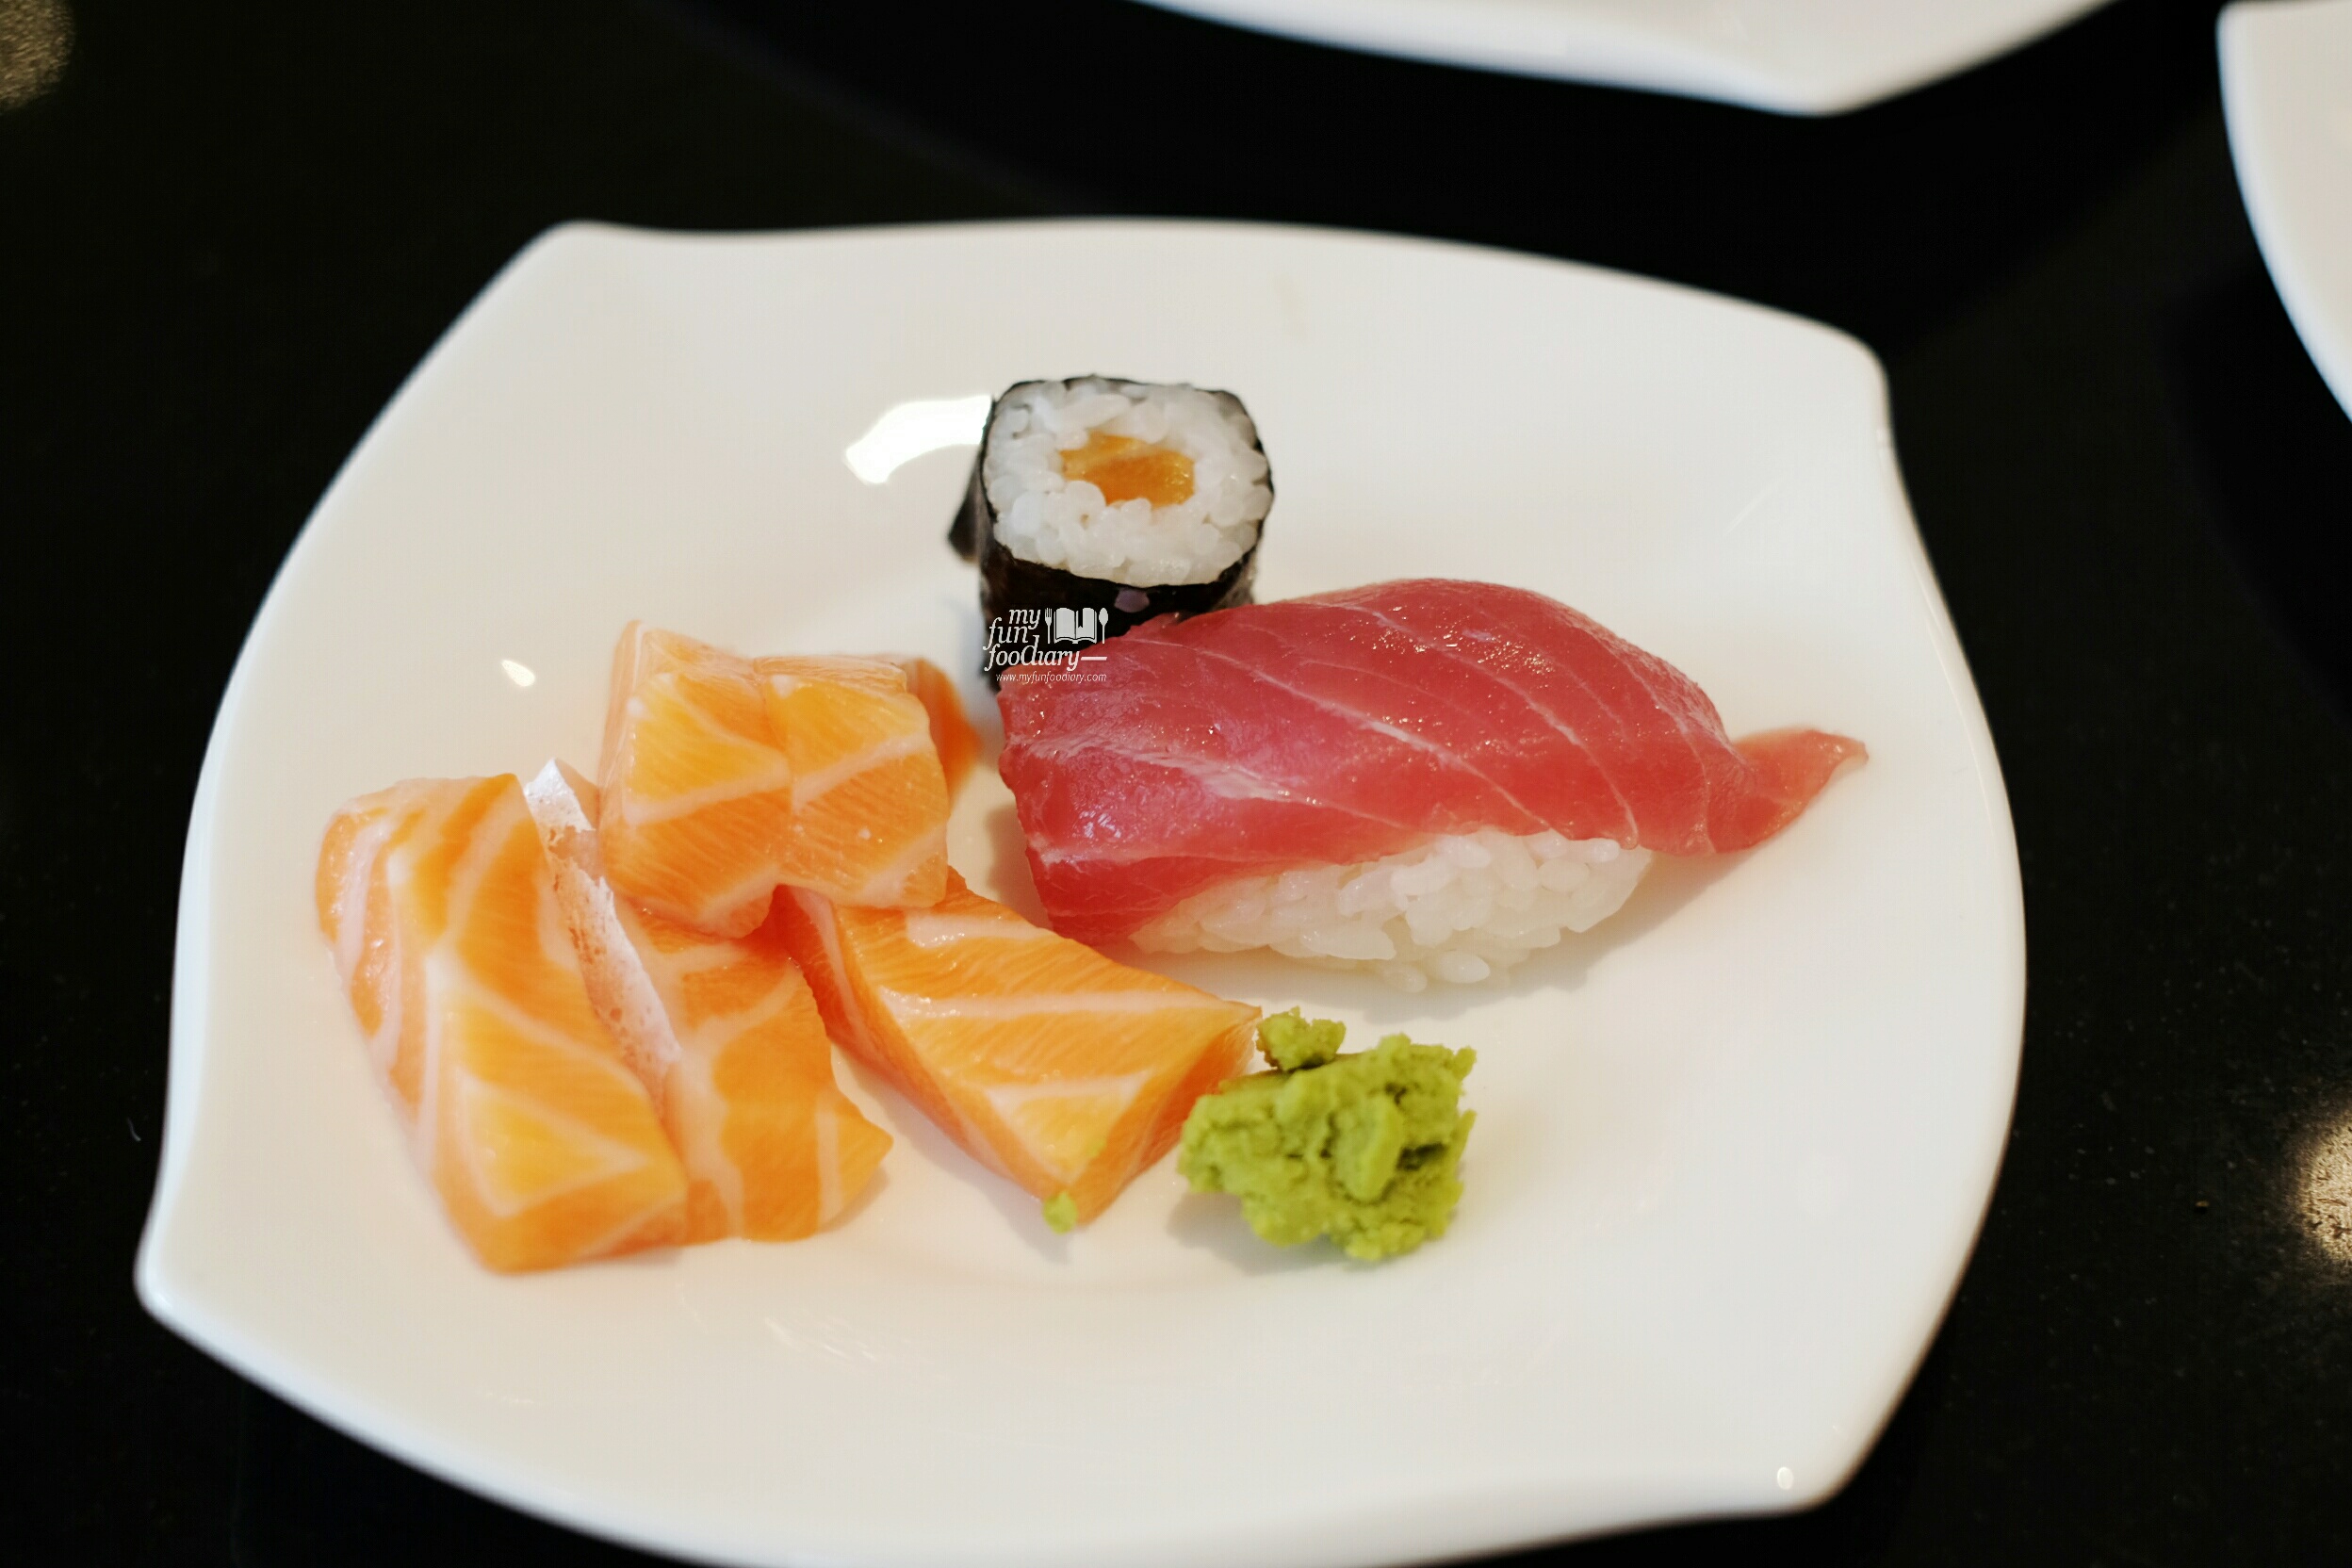 Fresh Sushi and Sashimi at Oscar Restaurant Conrad Centennial Singapore by Myfunfoodiary